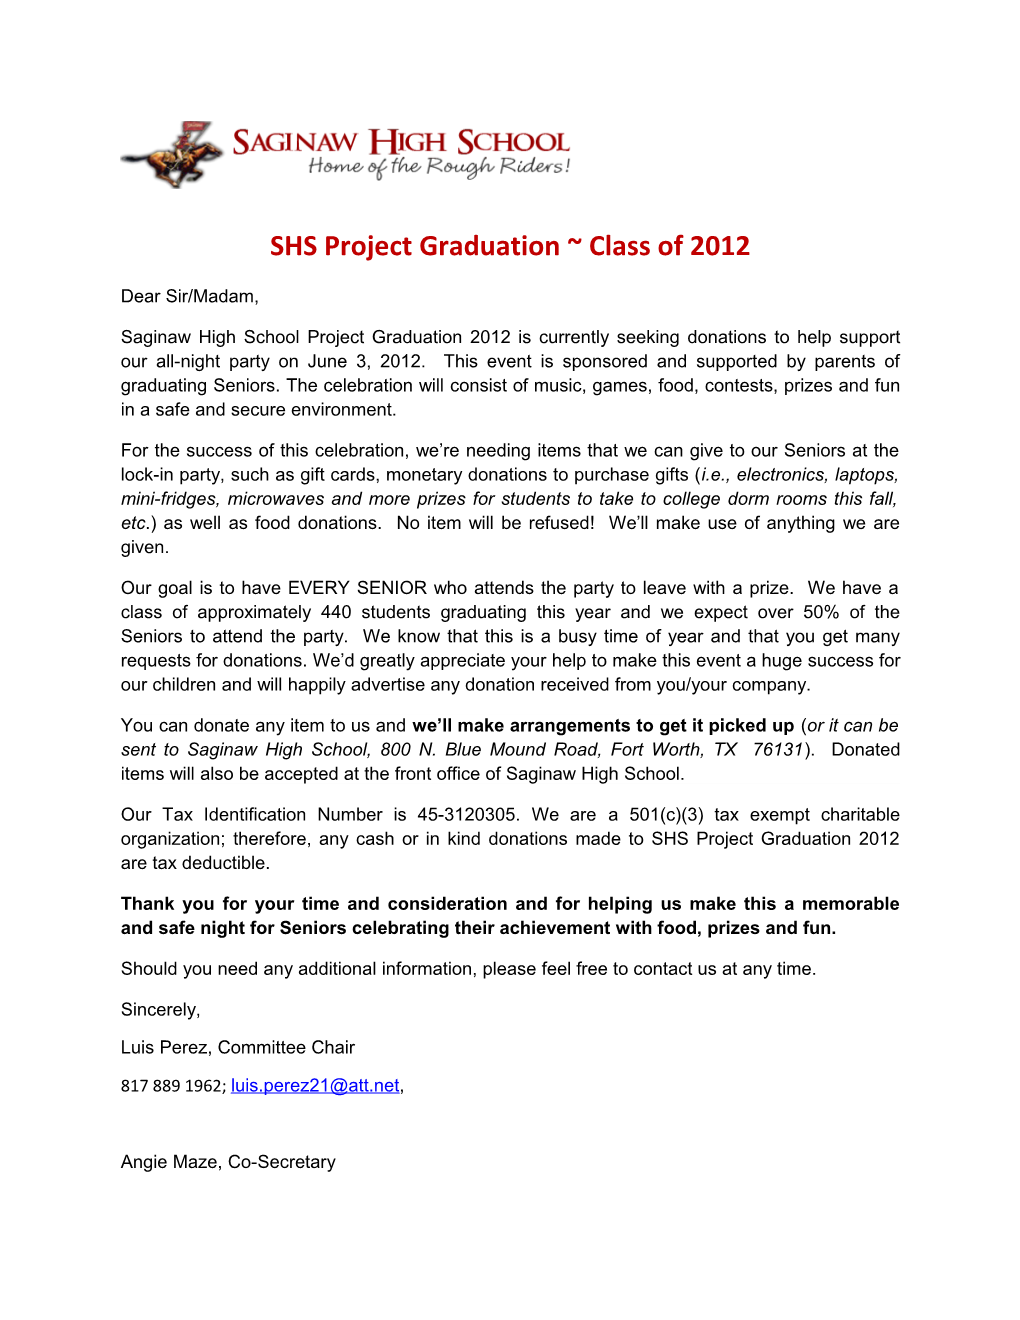 SHS Project Graduation Class of 2012